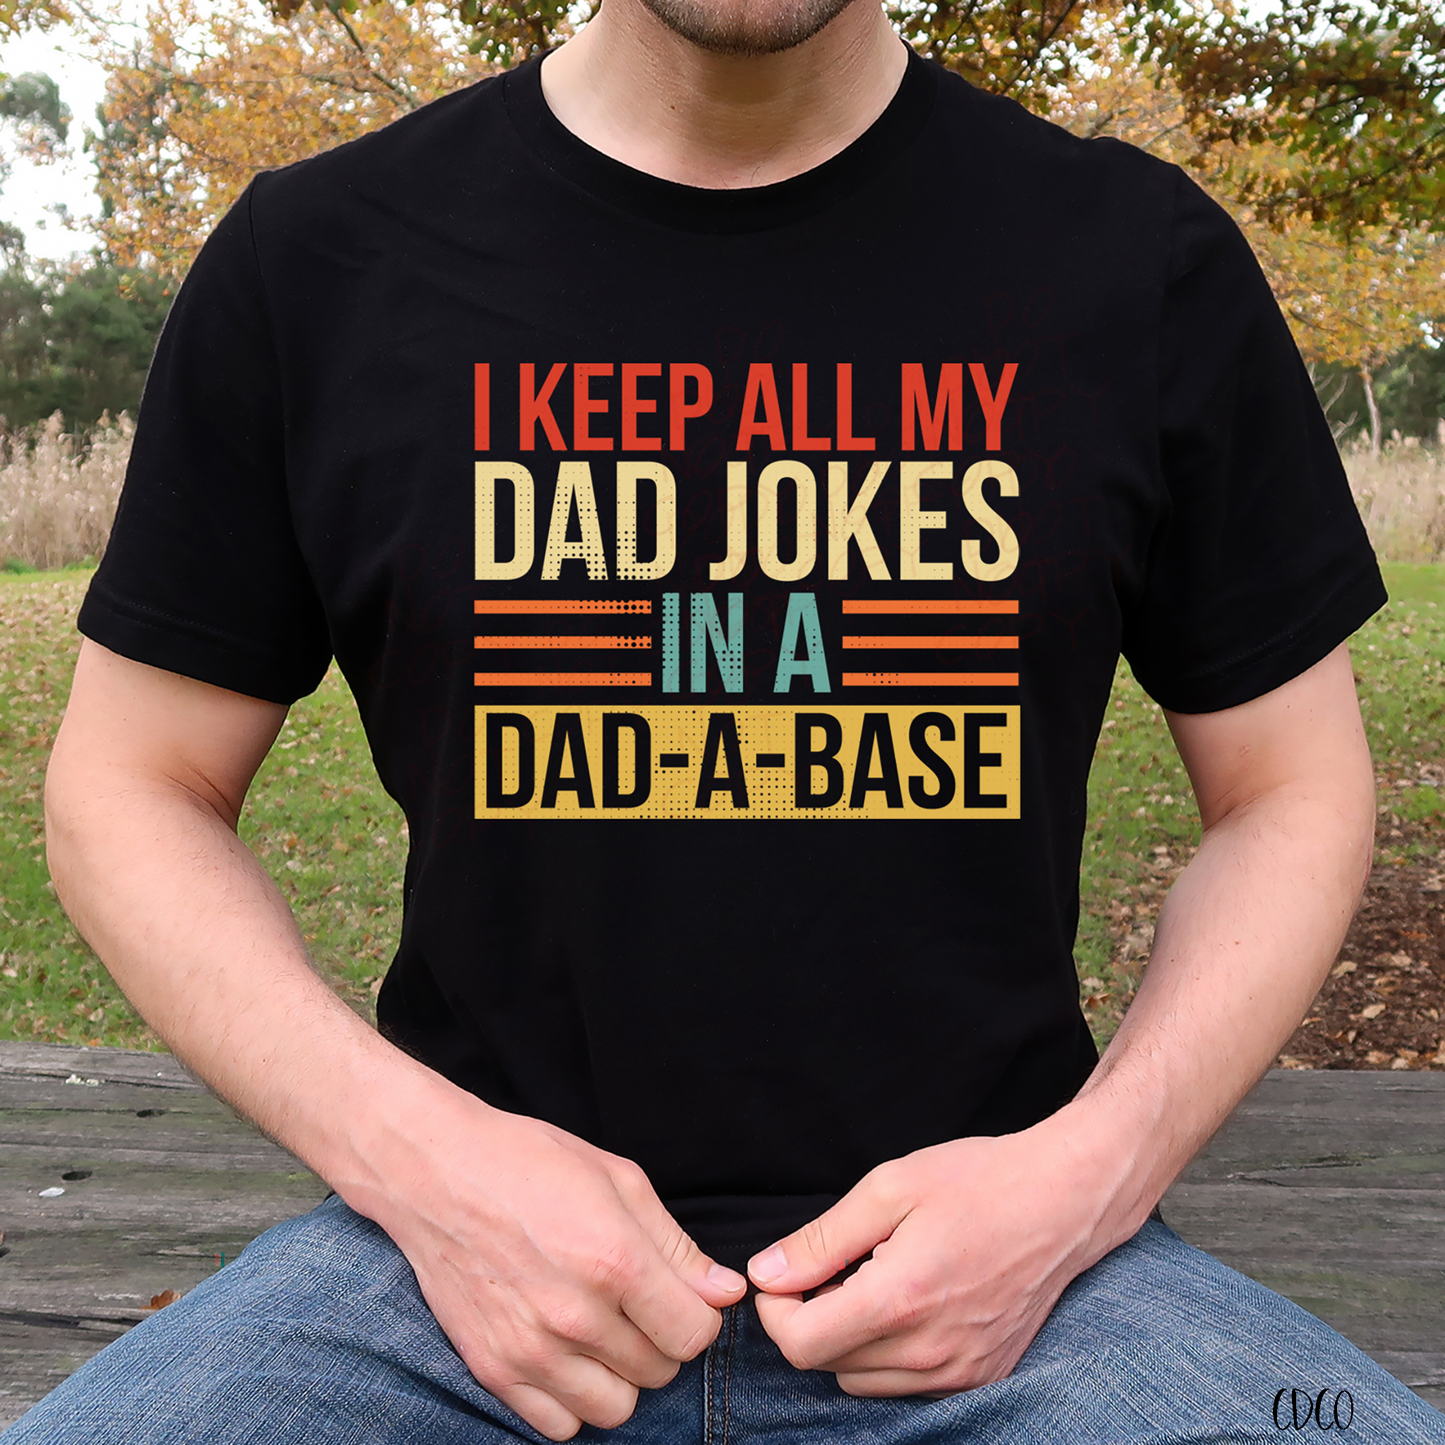 I Keep All My Dad Jokes in a Dad-A-Base *HIGH HEAT* (350°-375°)